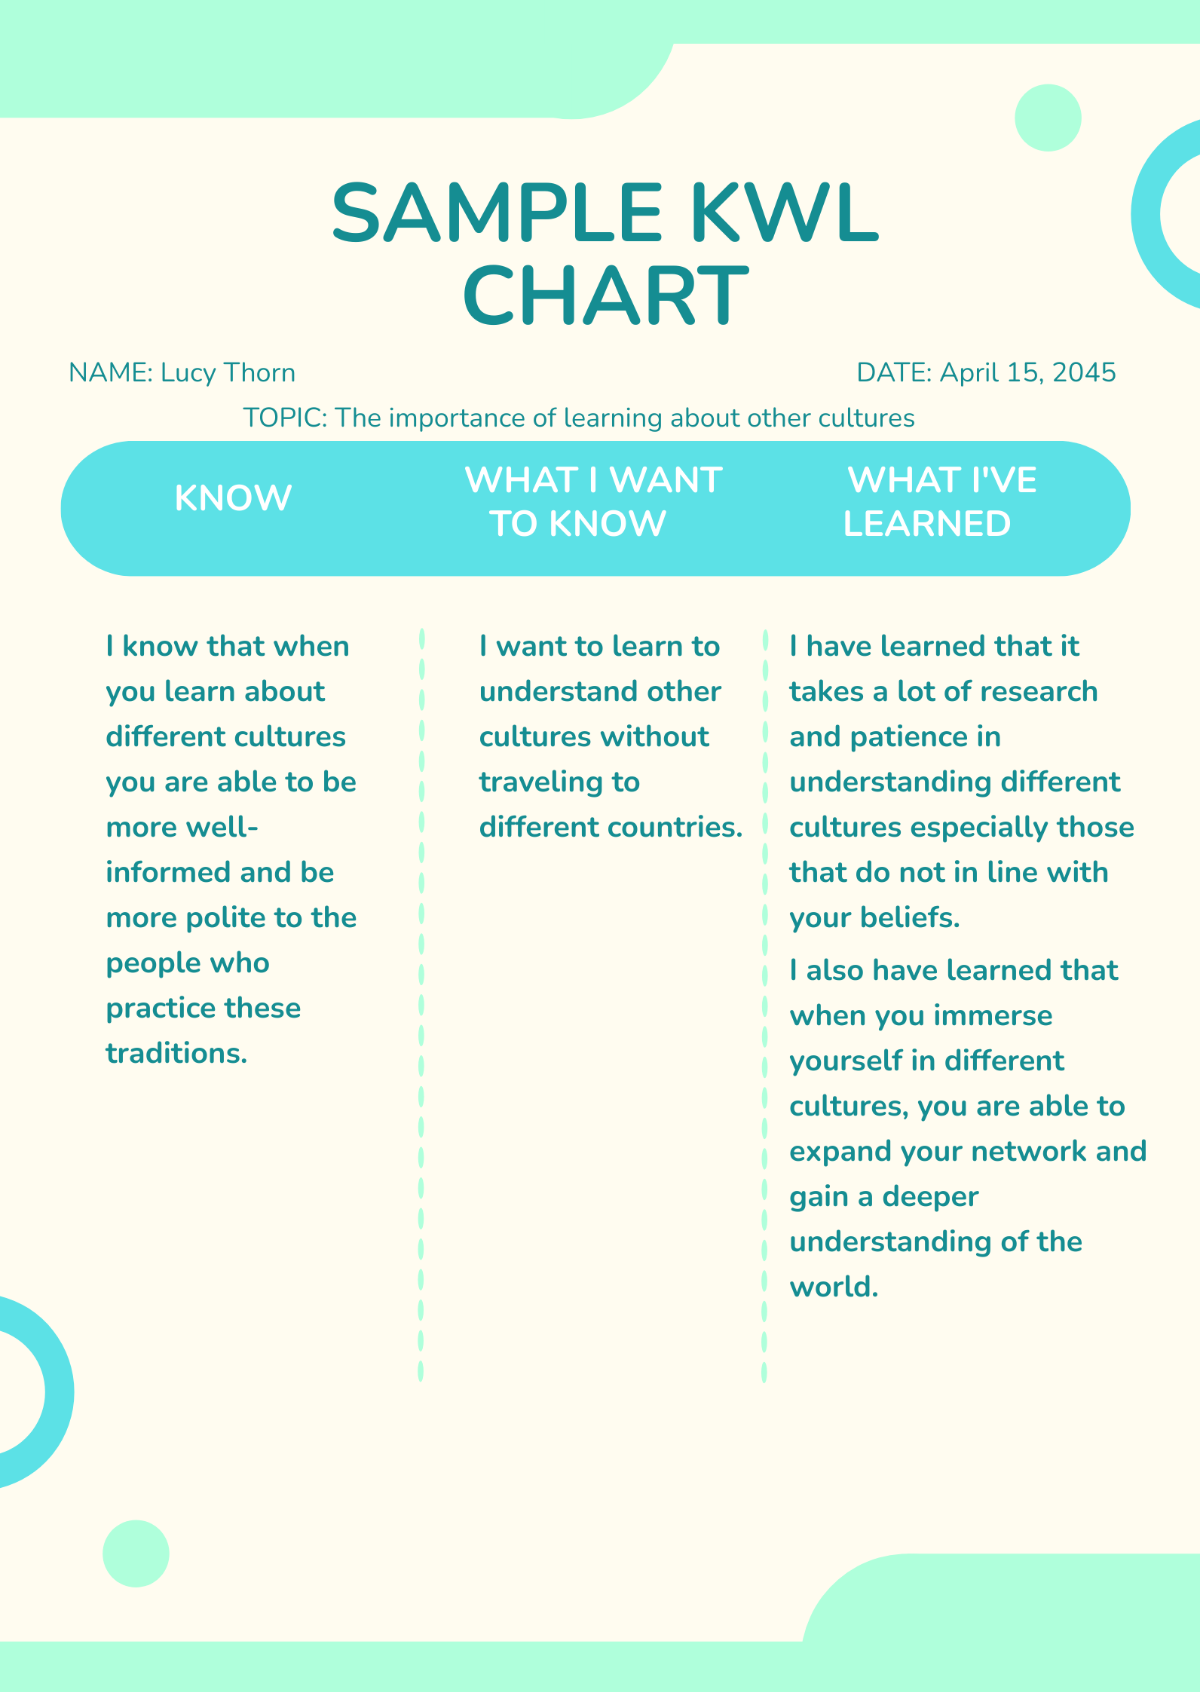 Sample KWL Chart Template